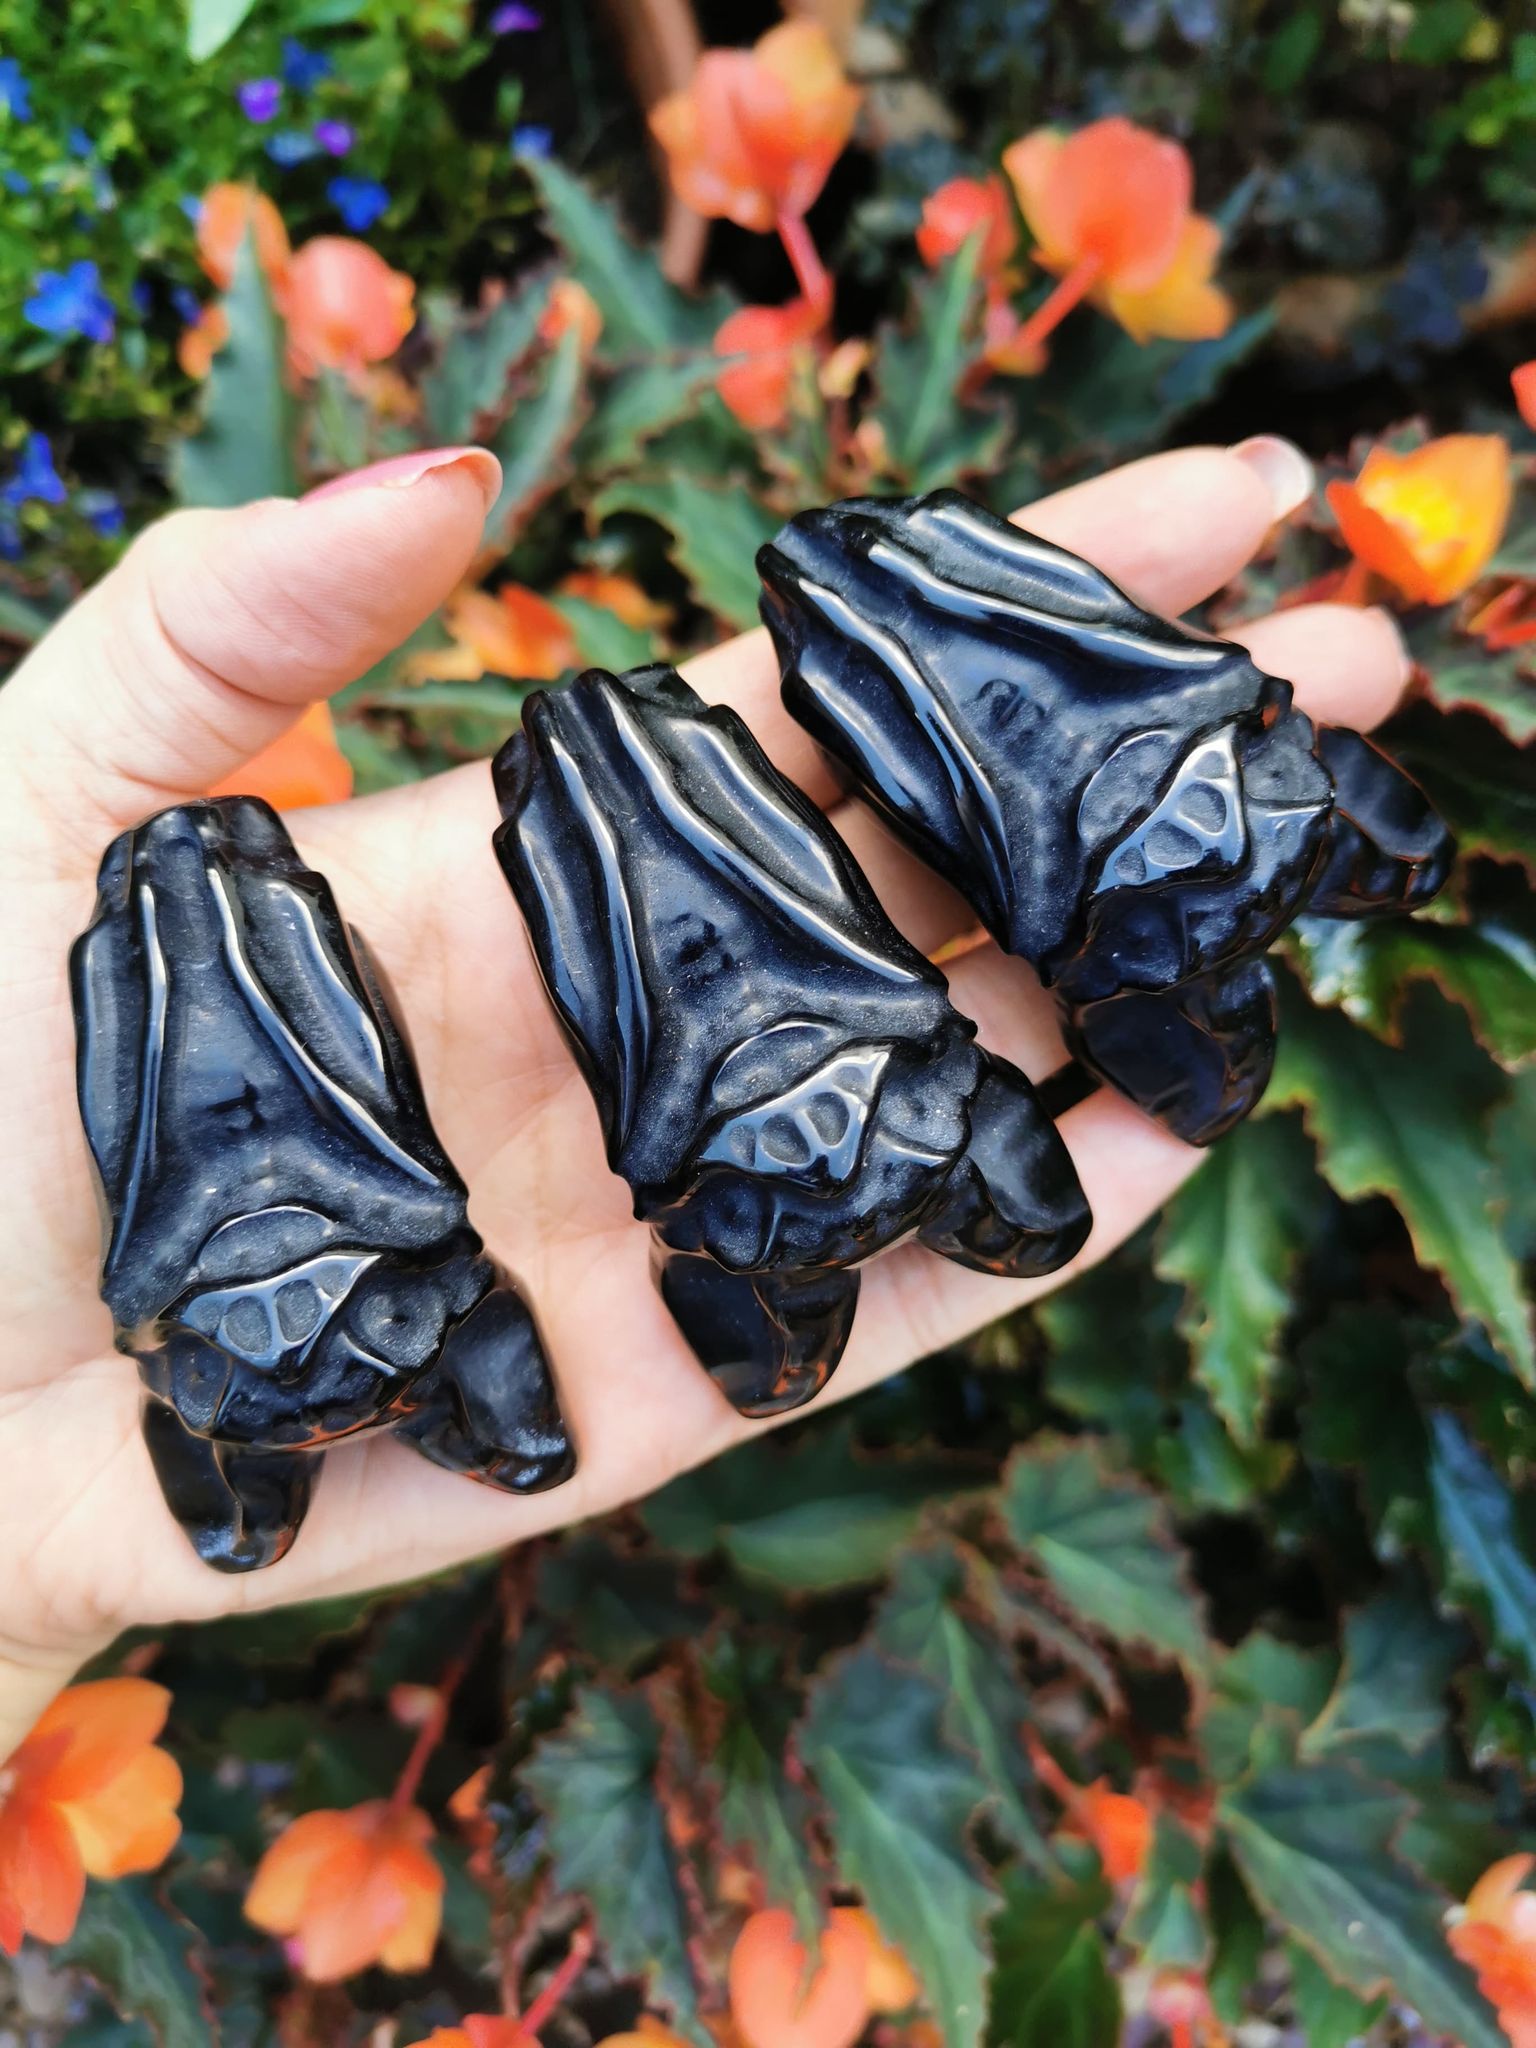 Extra large Obsidian Bats!